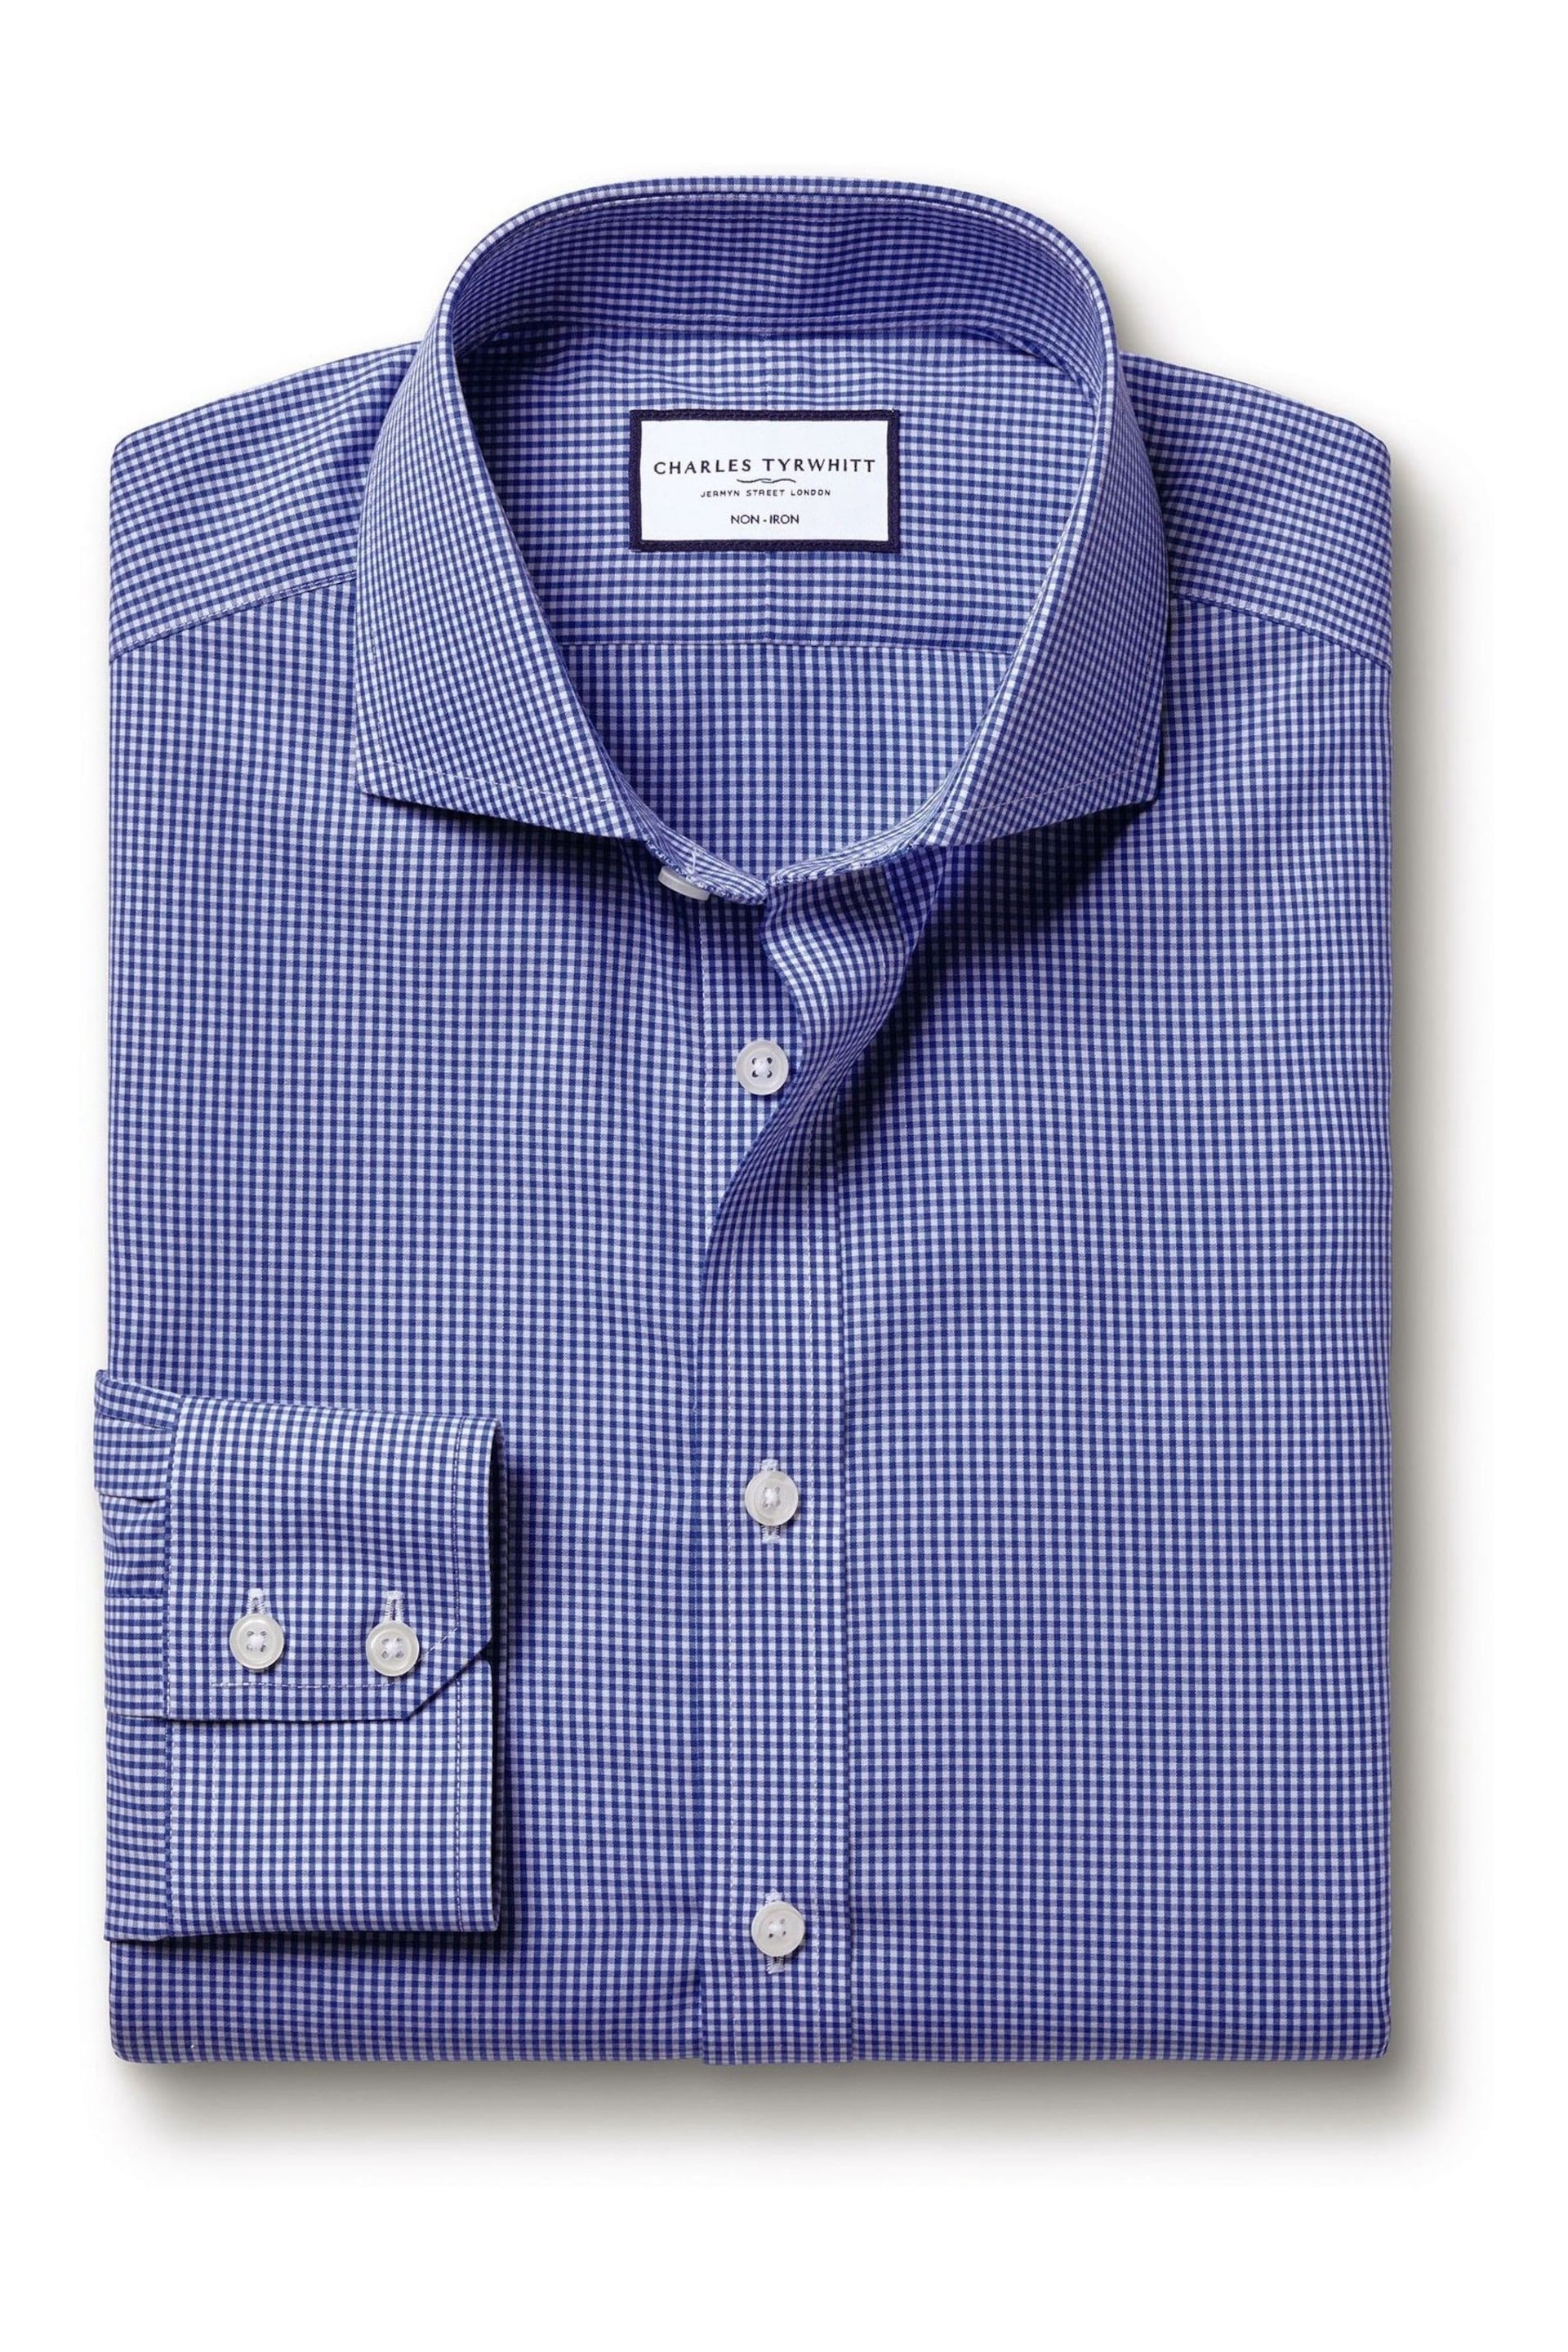 Charles Tyrwhitt Dark blue Mini Slim-FitGingham Check Non-iron Poplin CA Shirt - Image 4 of 6